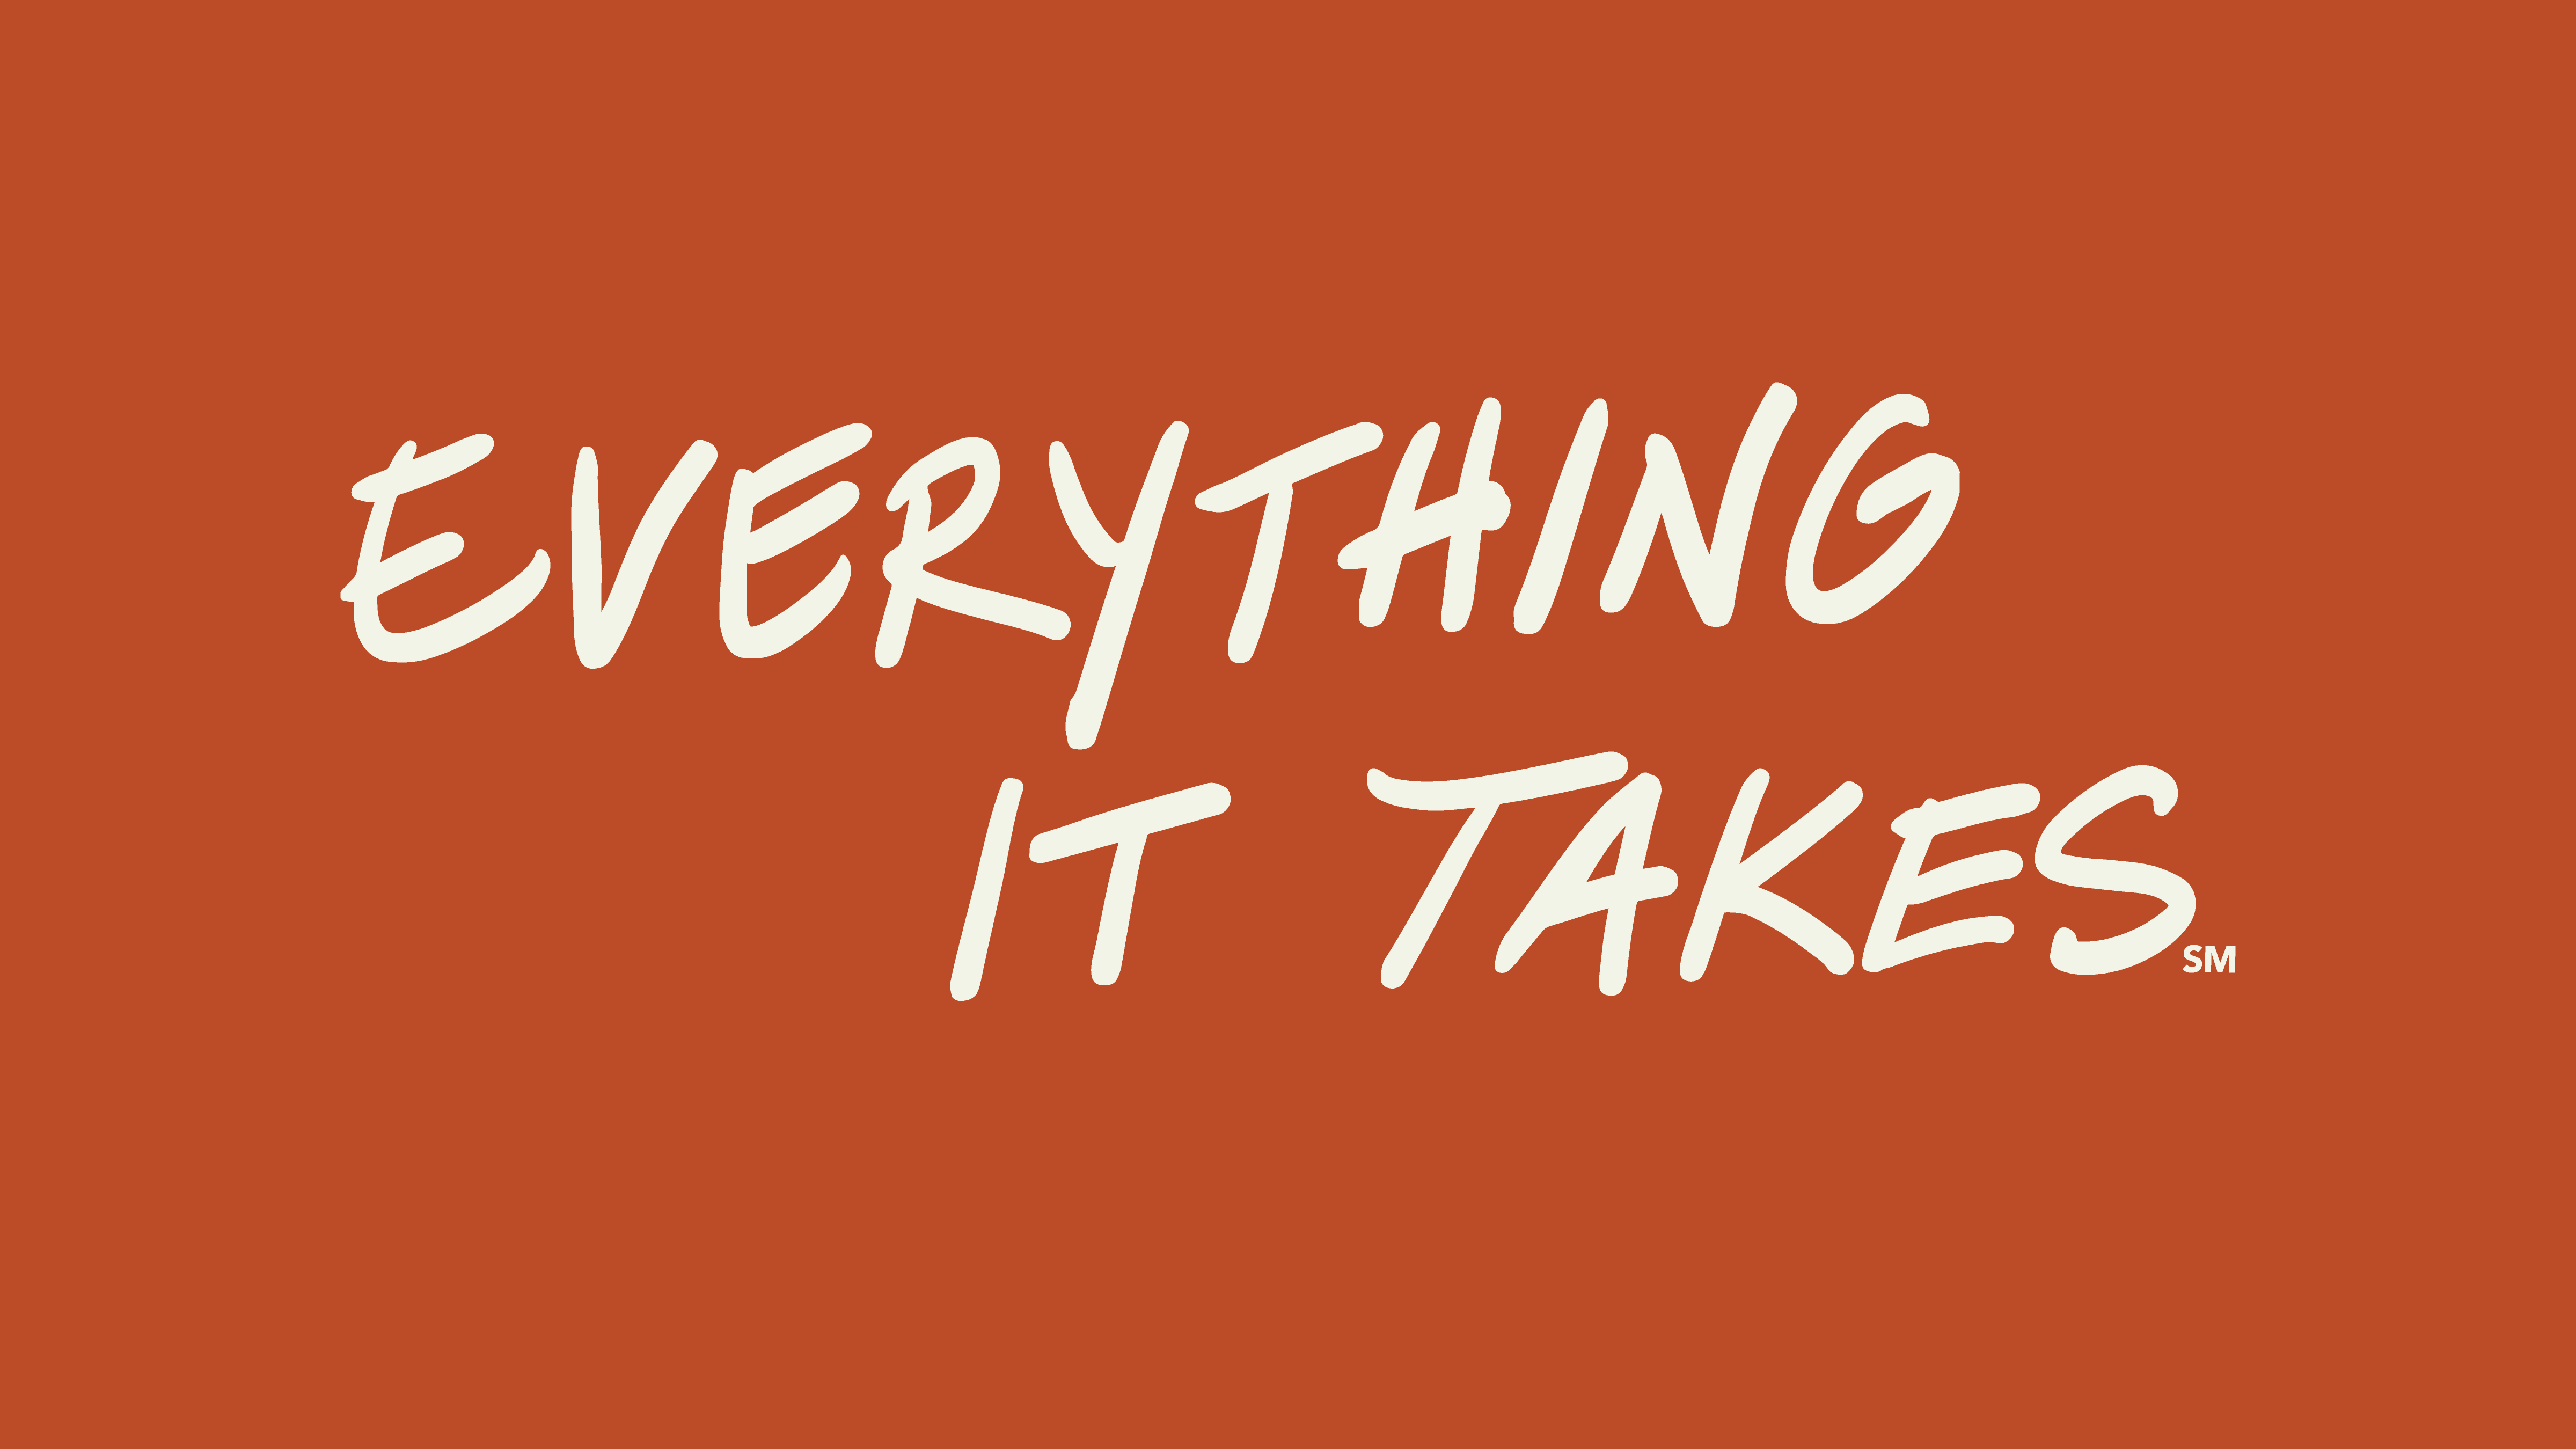 Everything it Takes - UT Health San Antonio Brand by Ten Adams